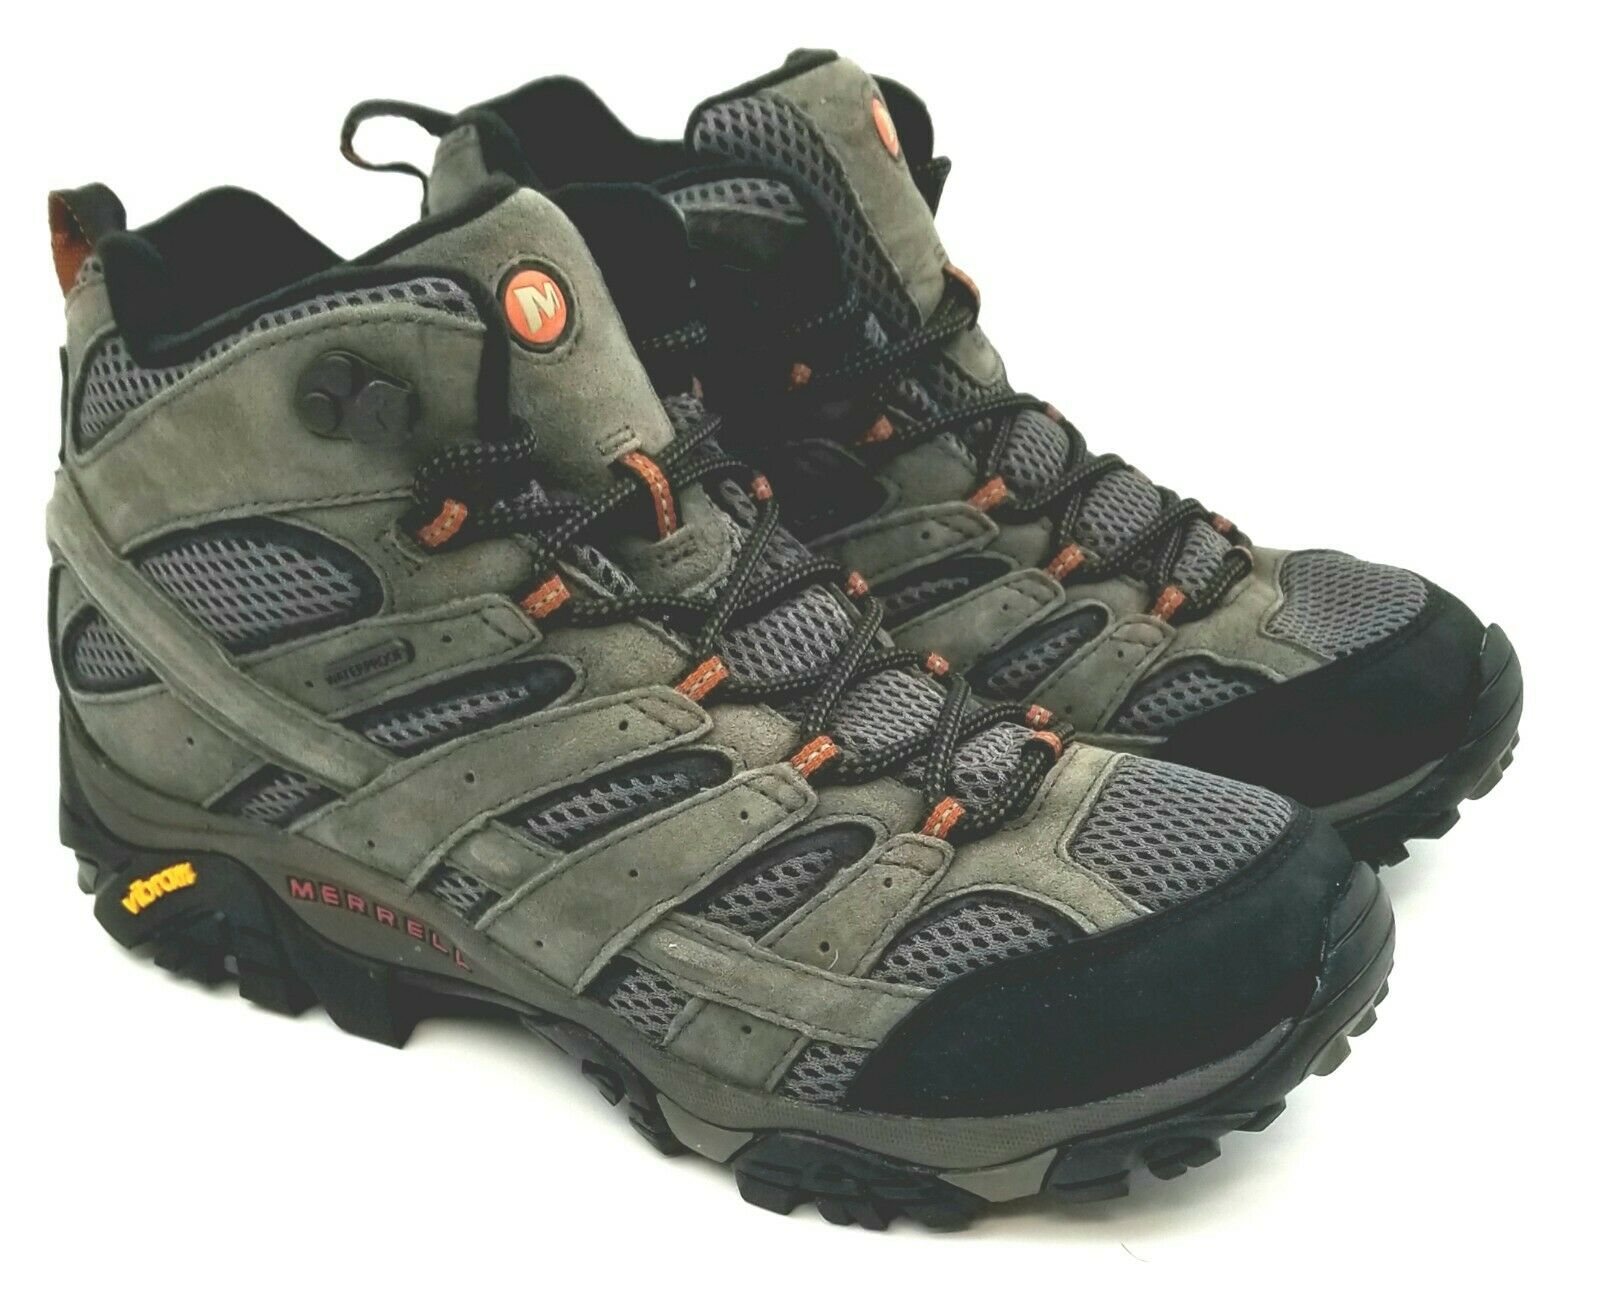 Merrell Moab 2 Mid Waterproof Hiking Boots, Men's Size US 10, EU 44